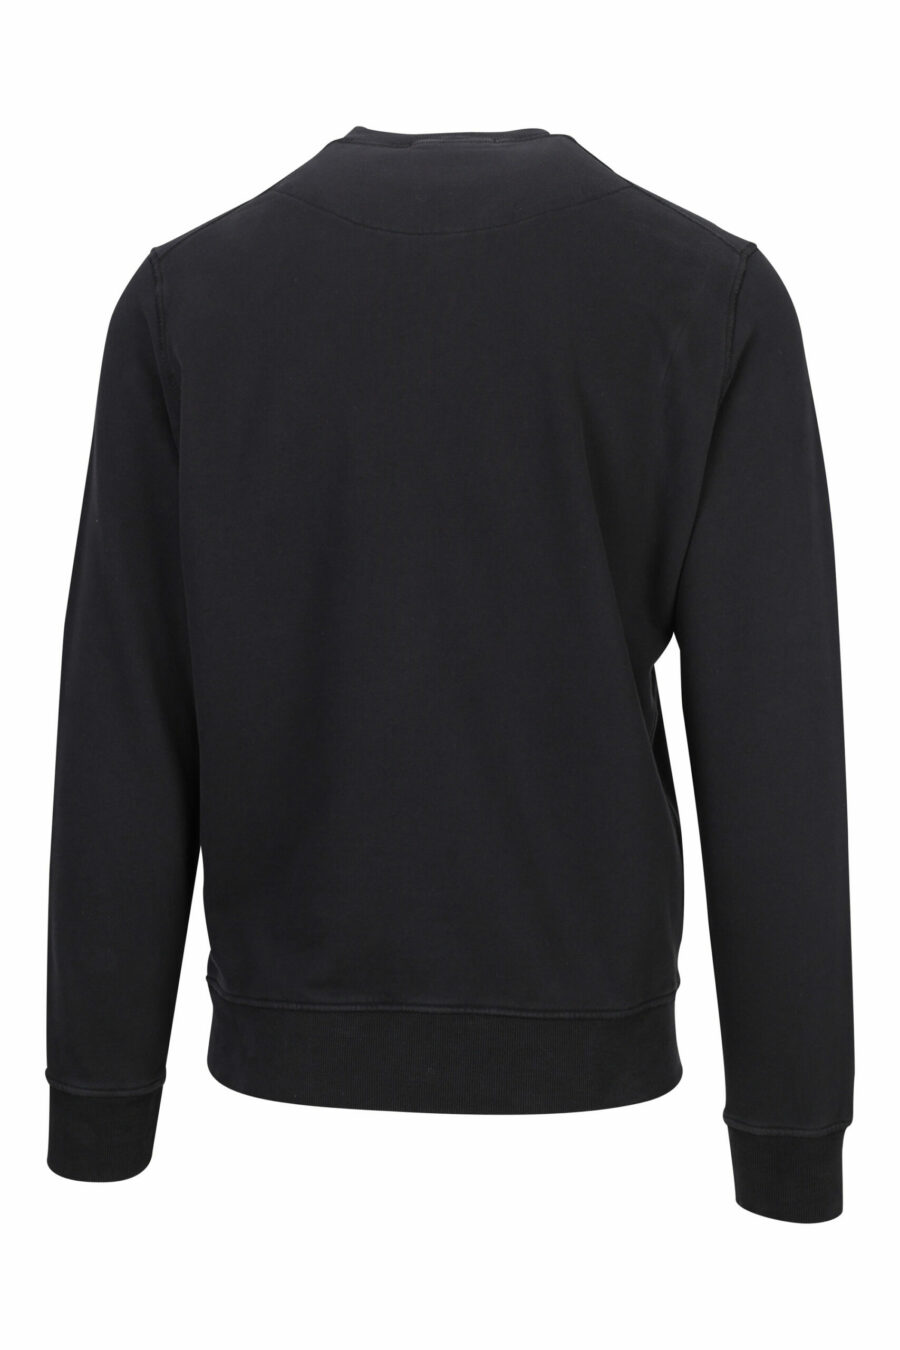 Sweatshirt noir avec maxilogo circulaire - 8052572740039 1 scaled